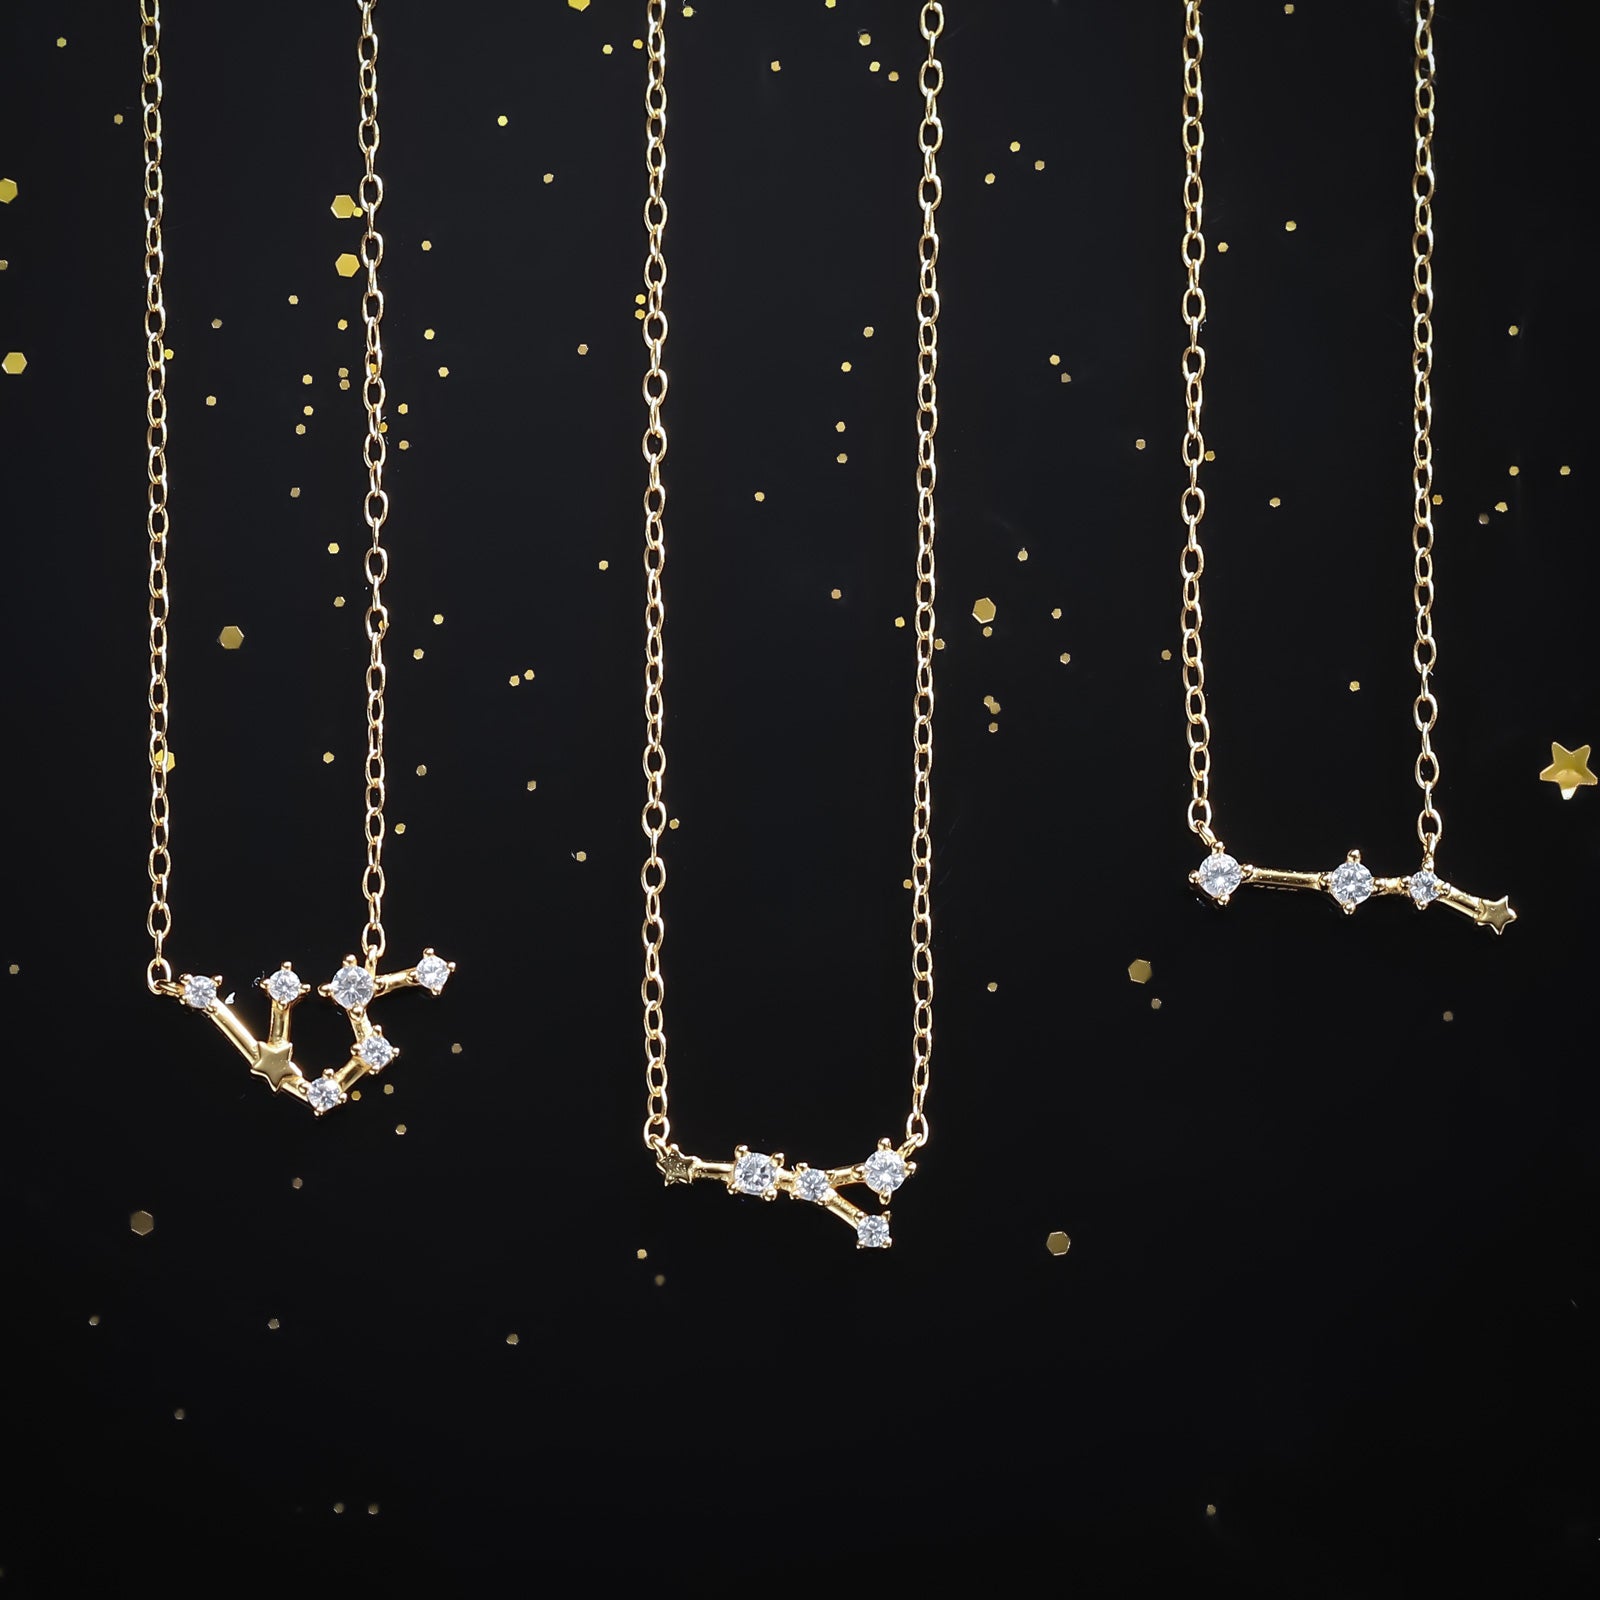 Gold Cancer Constellation Necklace Set